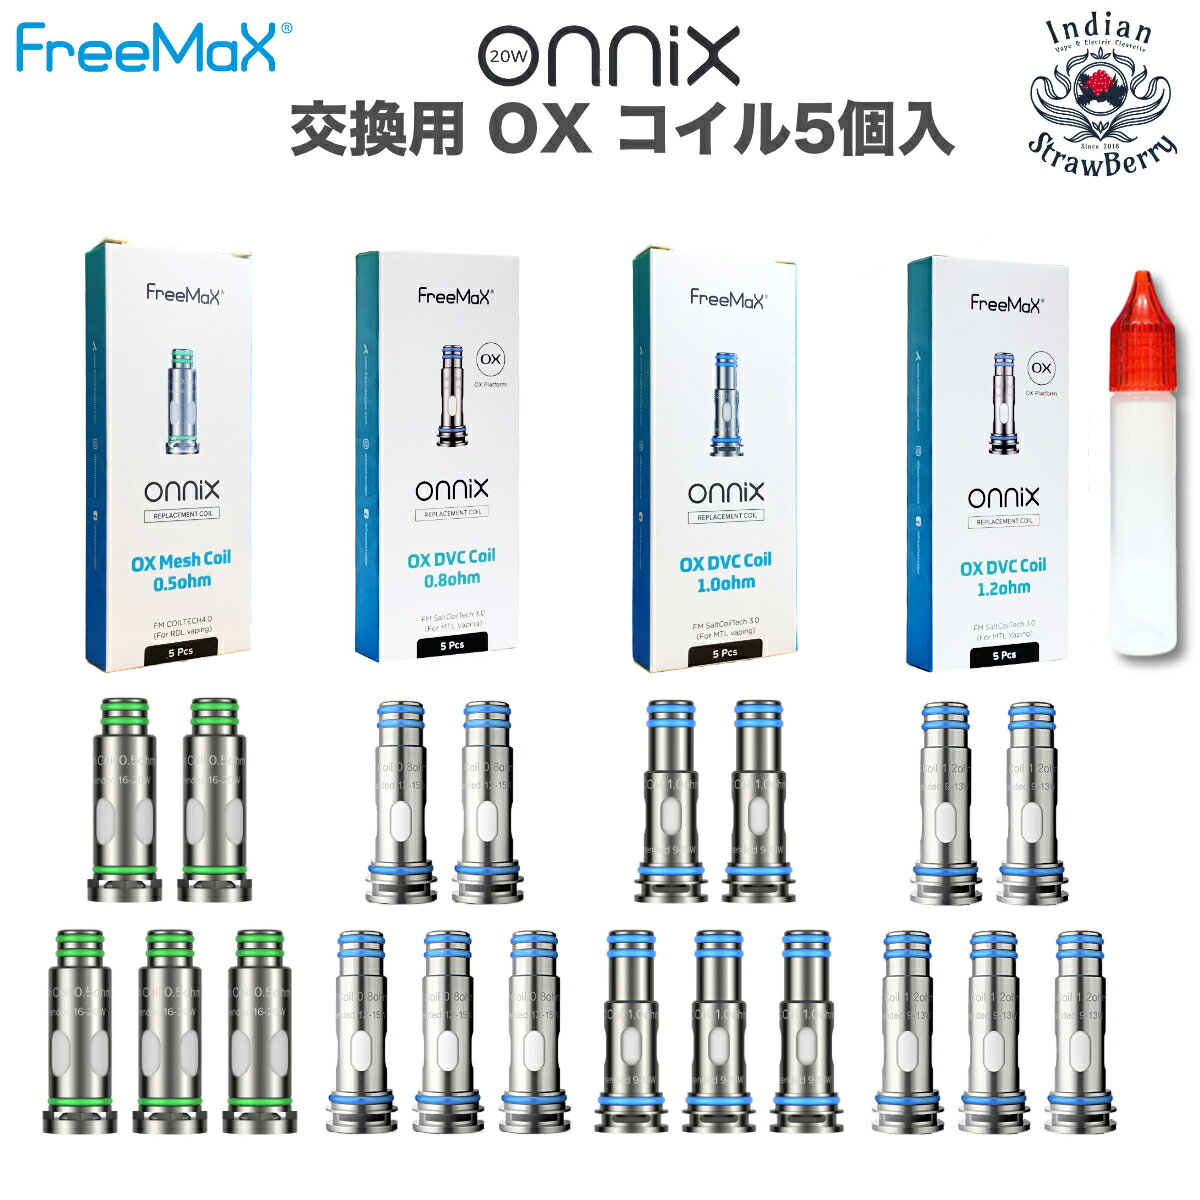 Freemax Onnix 交換用 OX コイル 5個入 for Onnix 20W 0.5Ω〜 / Onnix 2 15W 0.8Ω〜 + エンプティボトル